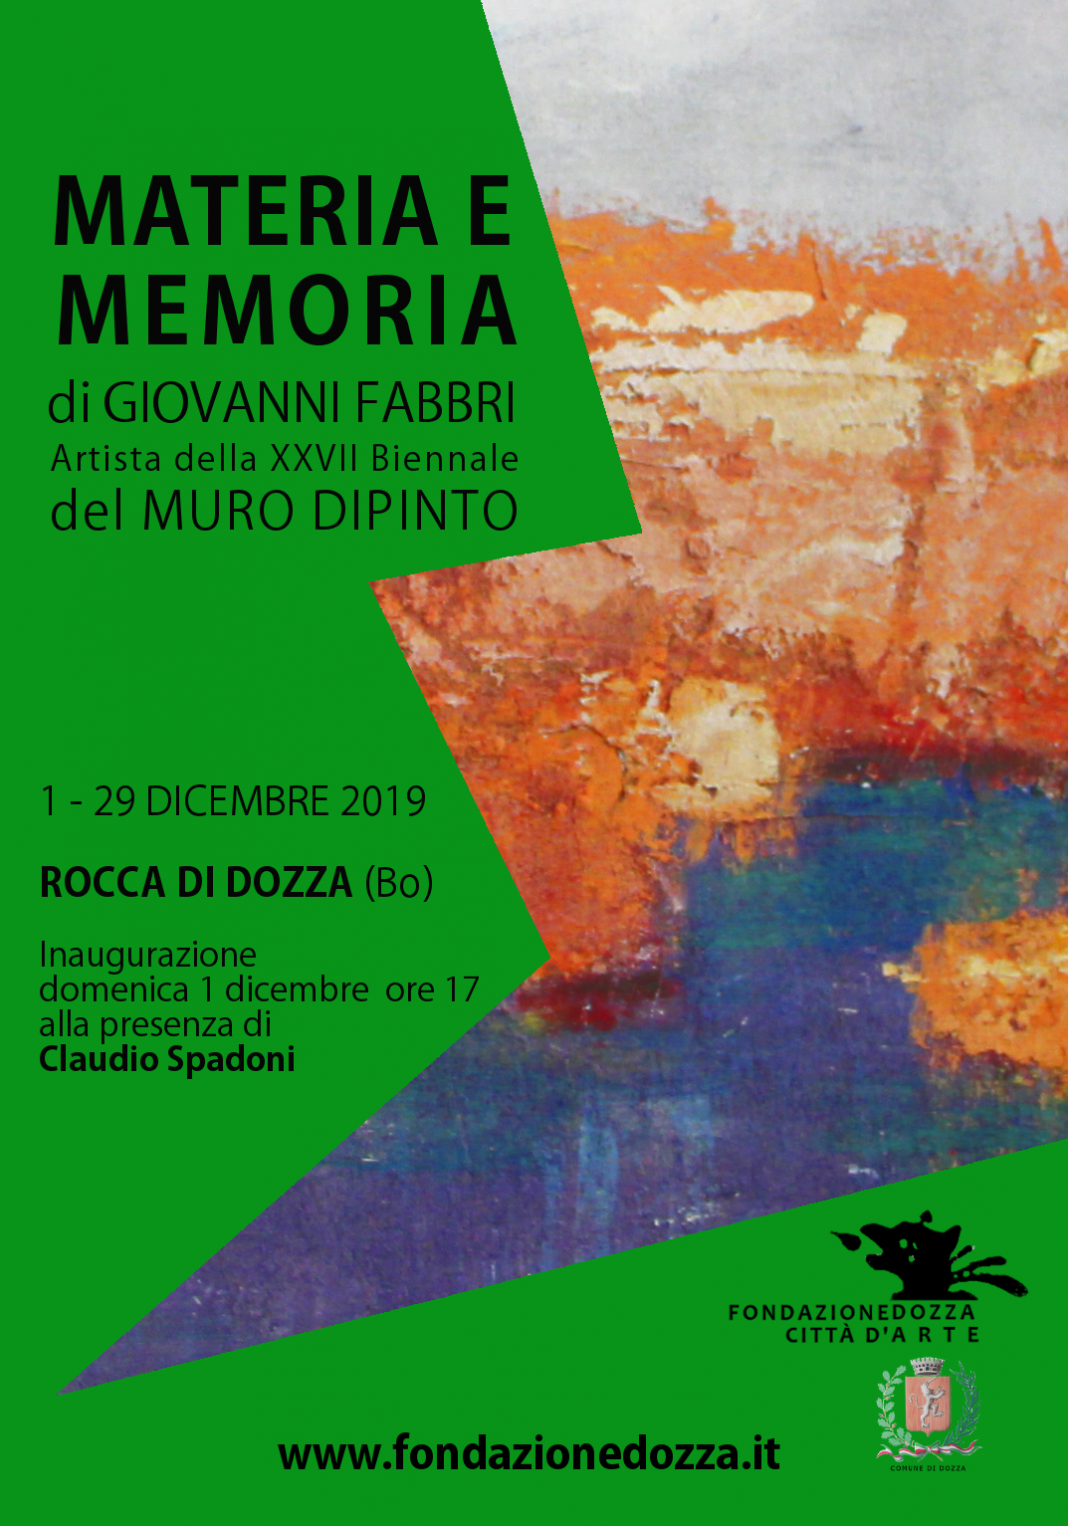 Giovanni Fabbri – Materia e memoriahttps://www.exibart.com/repository/media/formidable/11/locandina-fabbri-senza-conami-1068x1526.png